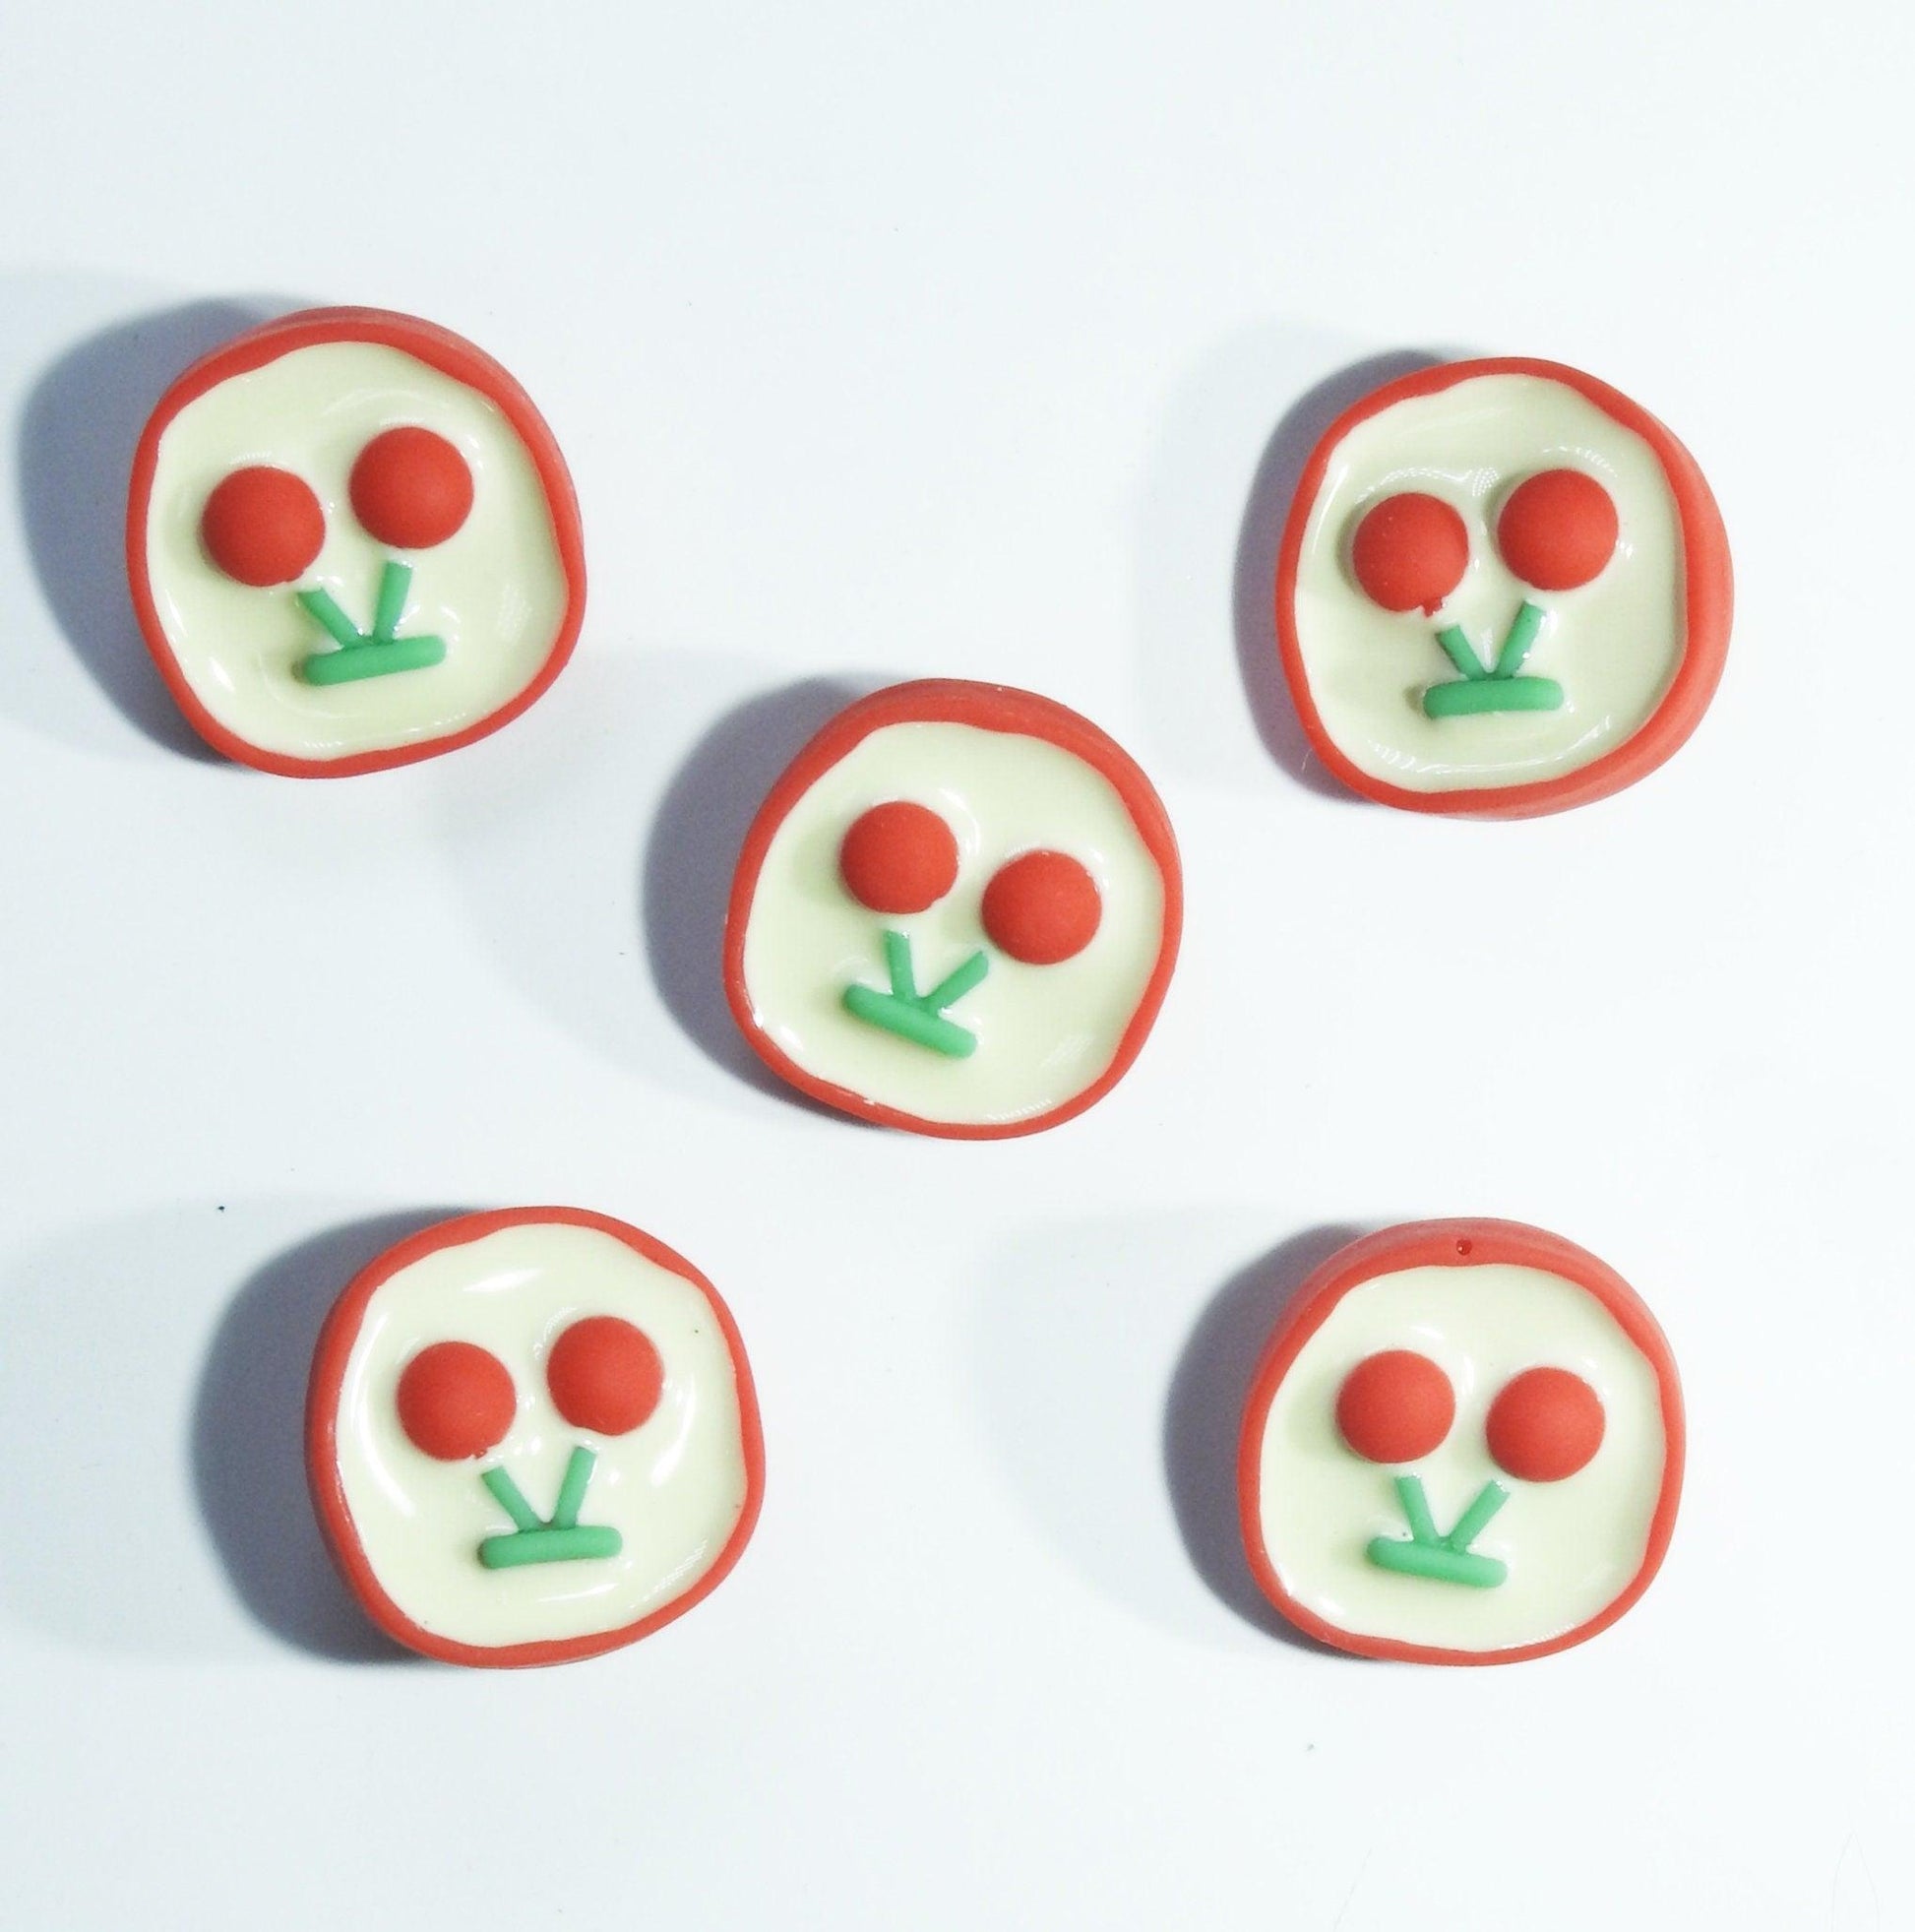 Cherry buttons